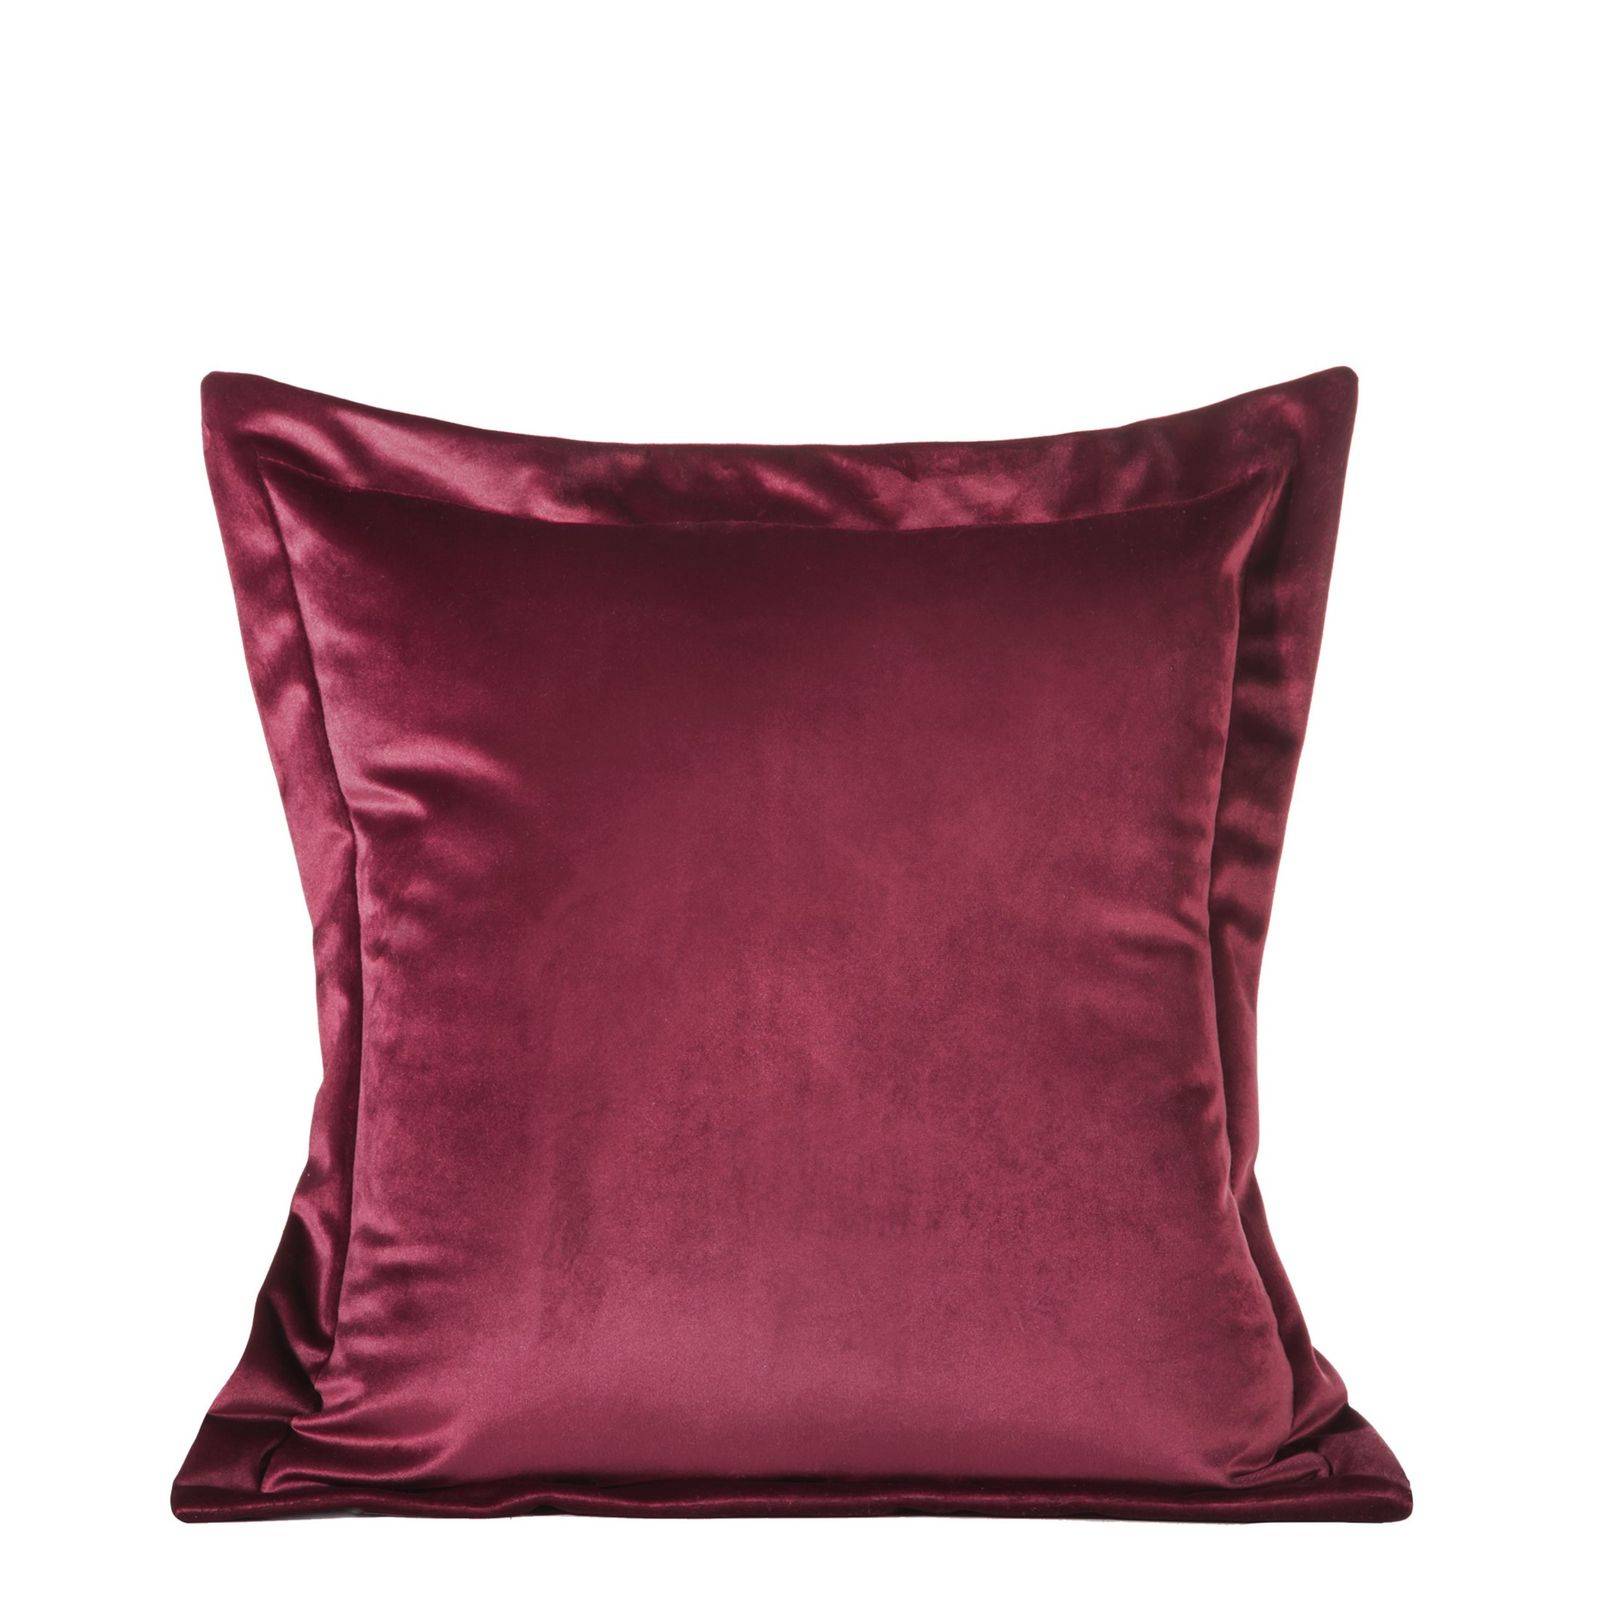 Dekoratyvinė pagalvėlė “Ria” burgundy 45×45 cm, 2 vnt